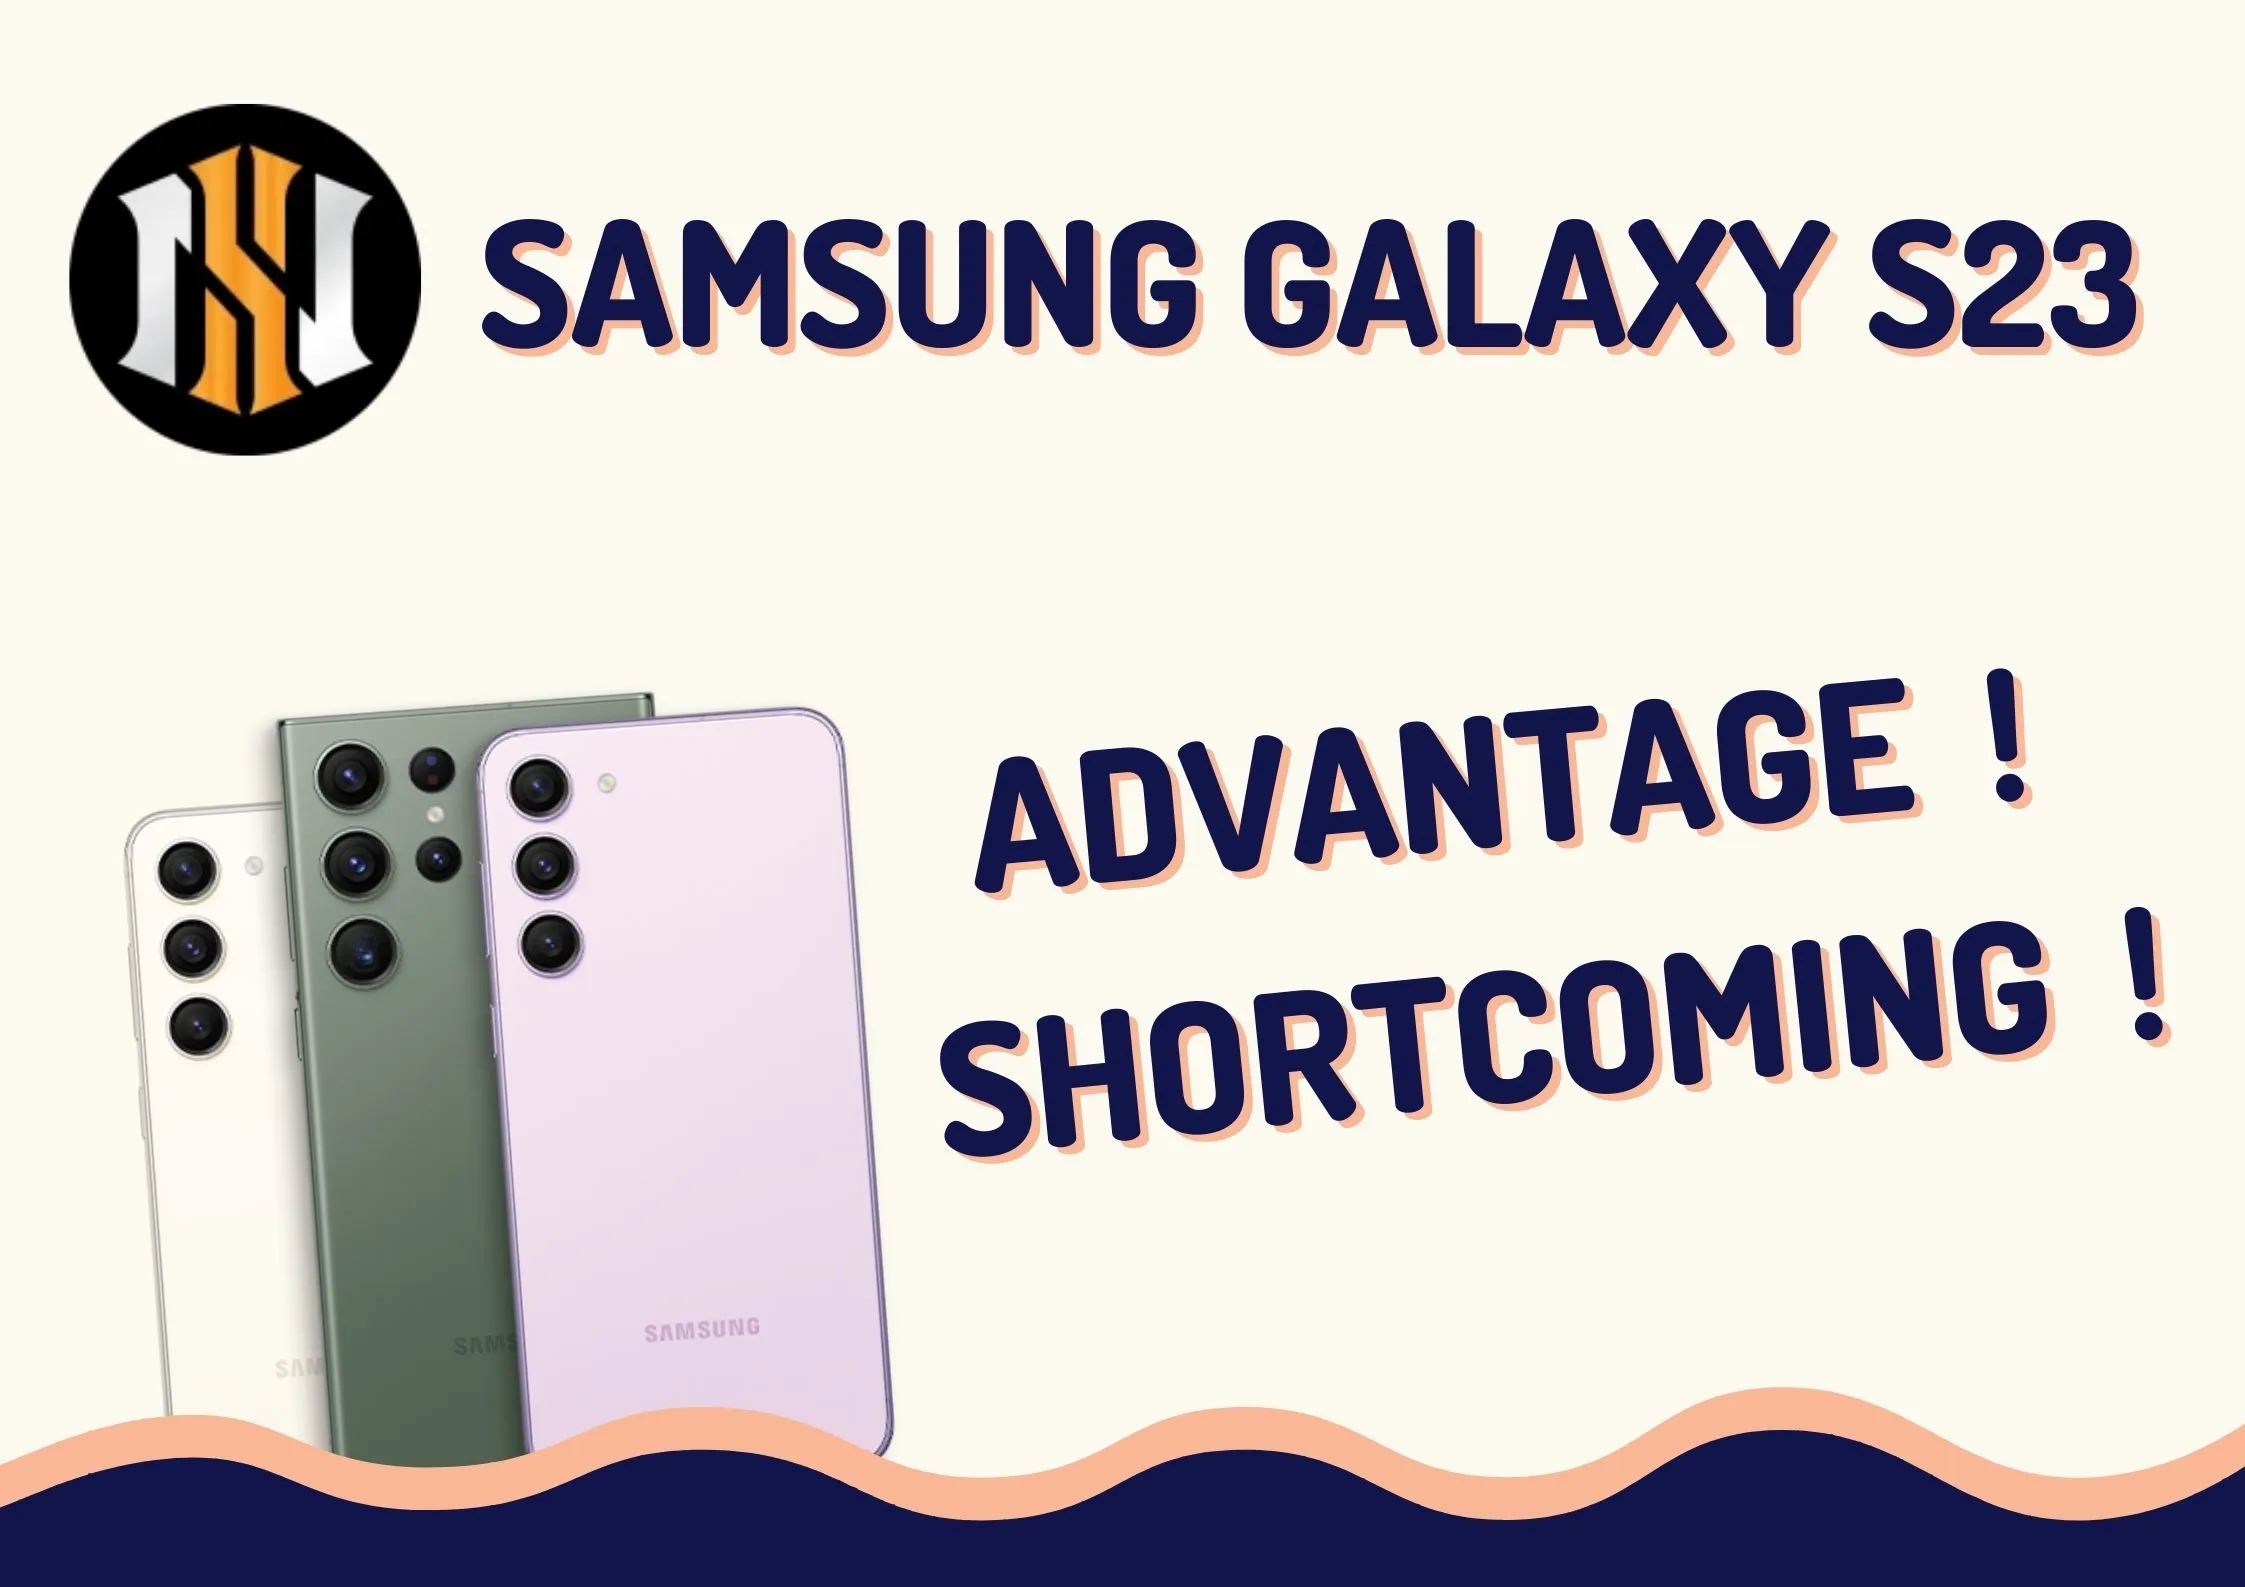 Samsung Galaxy S23 | play Slot Games on Samsung phone